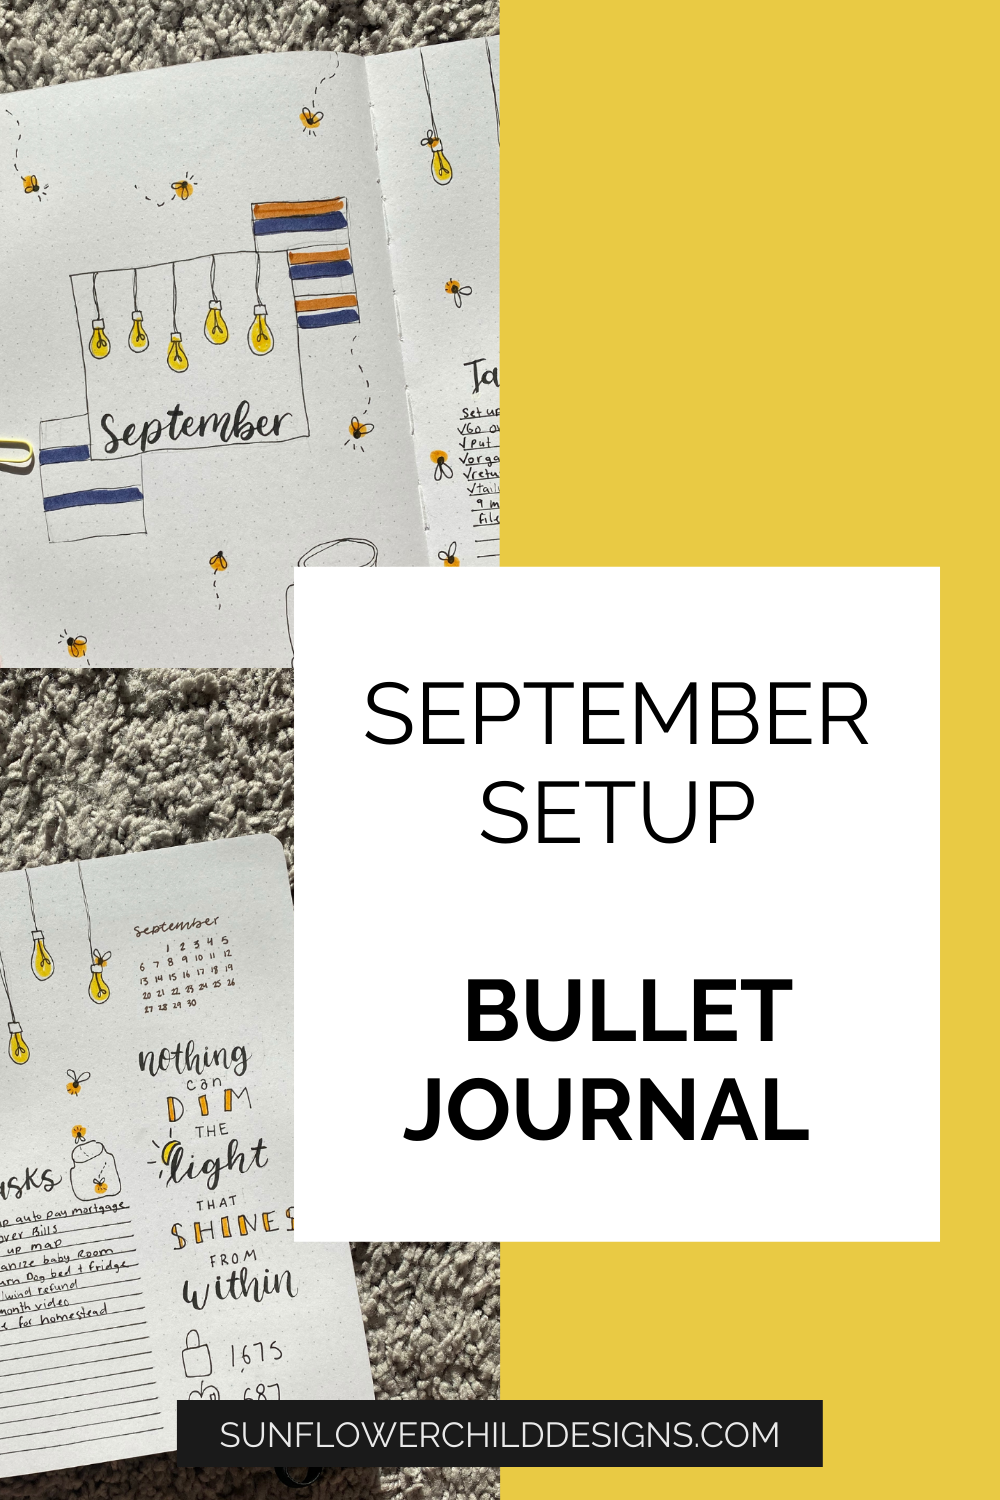 September-bullet-journal-ideas-11.png